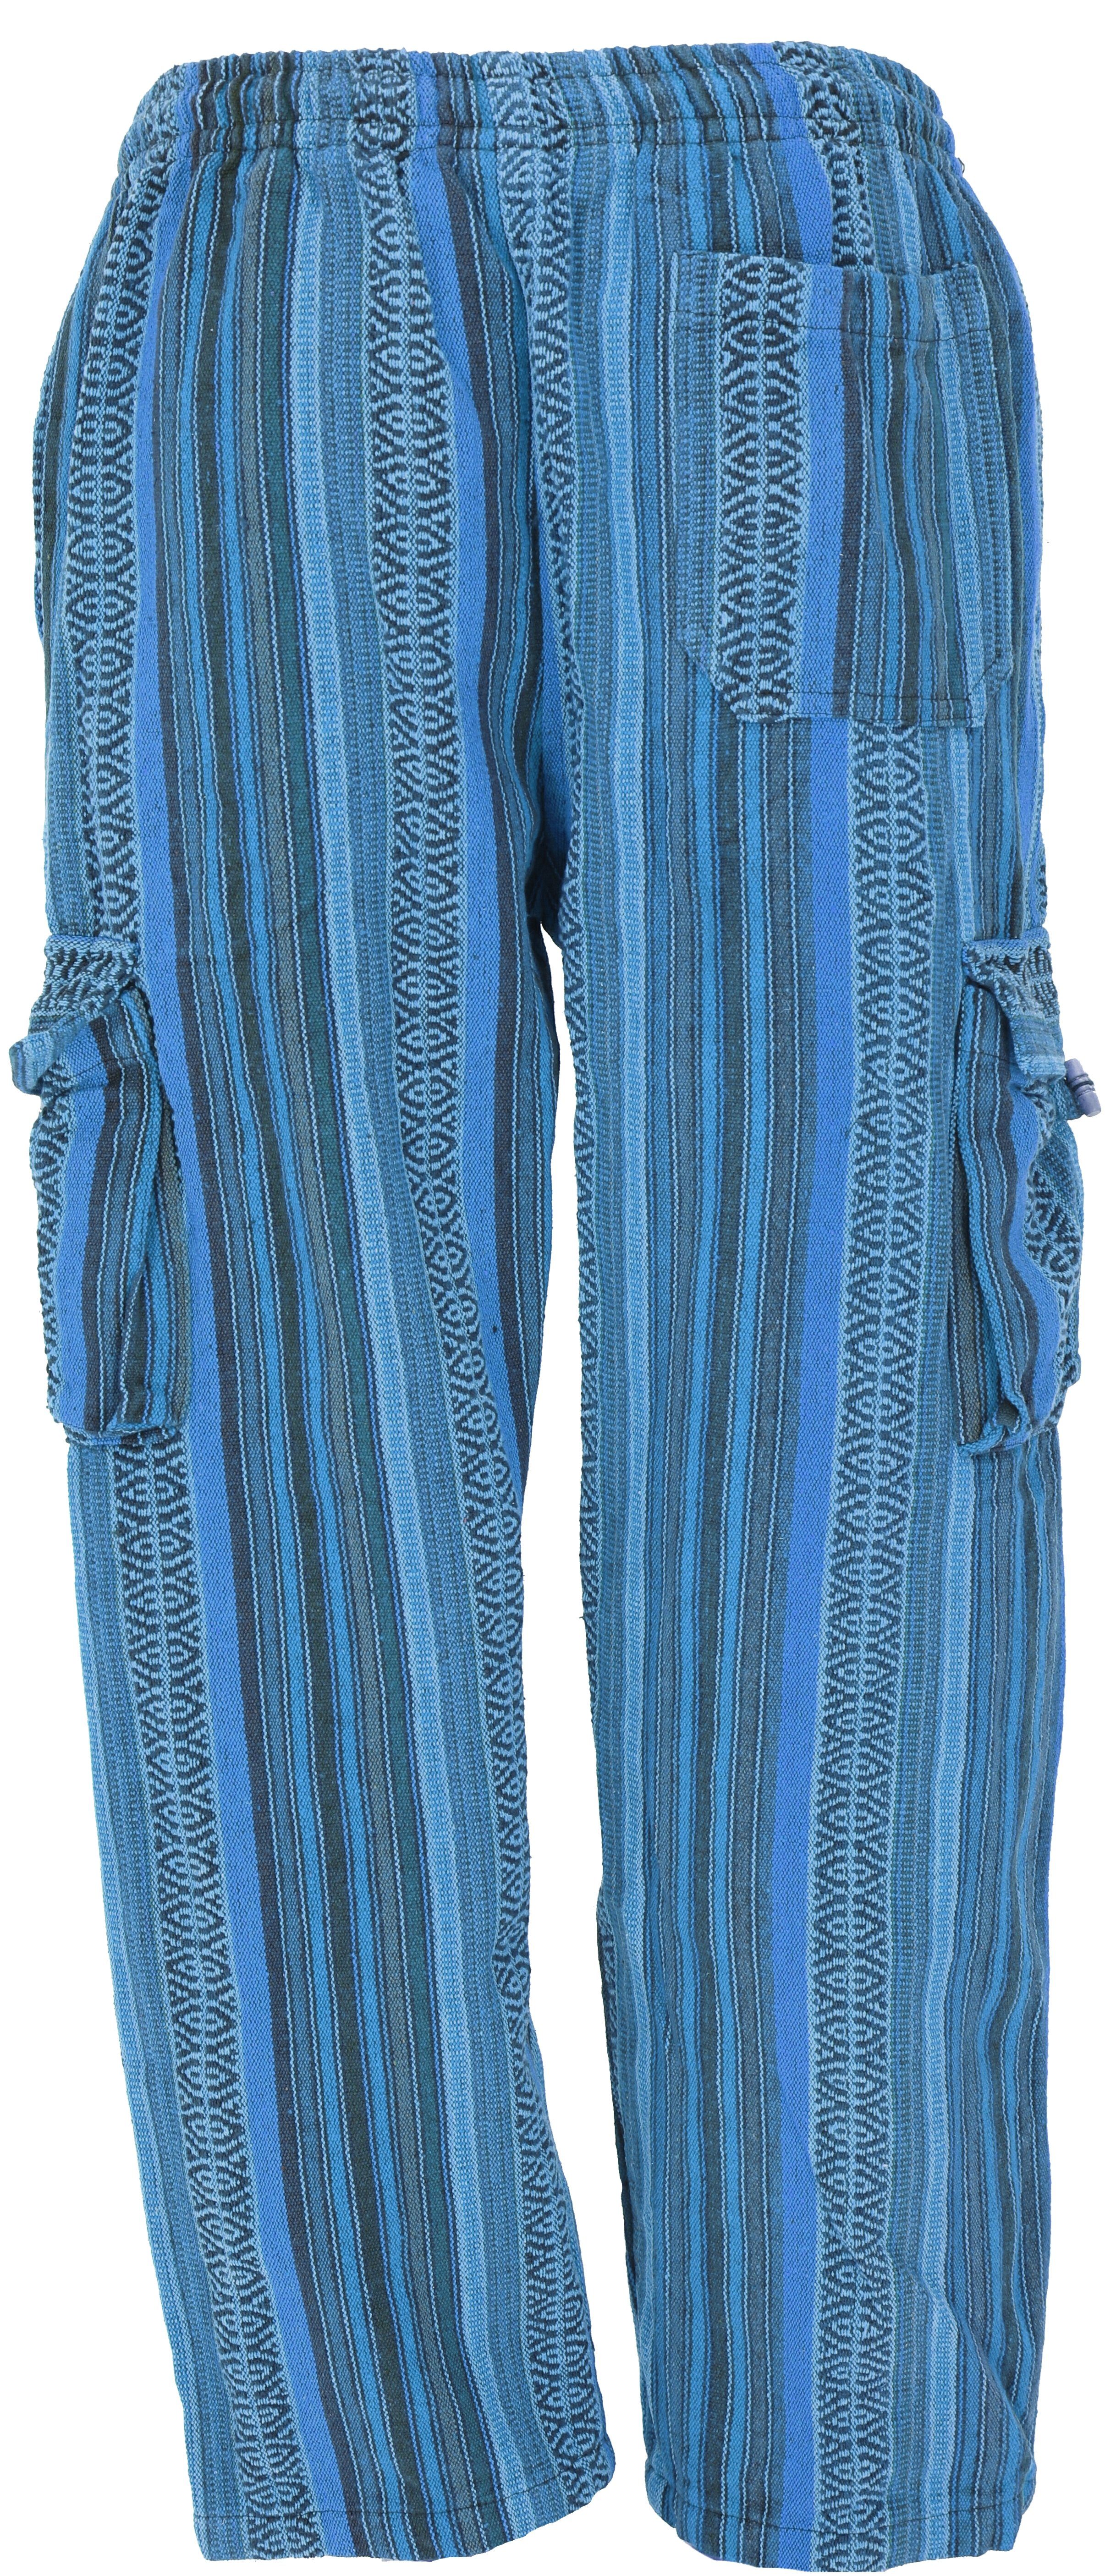 Goa - Style, Hippie, alternative Hose, Loose fit Hose Ethno Guru-Shop Bekleidung Relaxhose blau Wohlfühlhose,